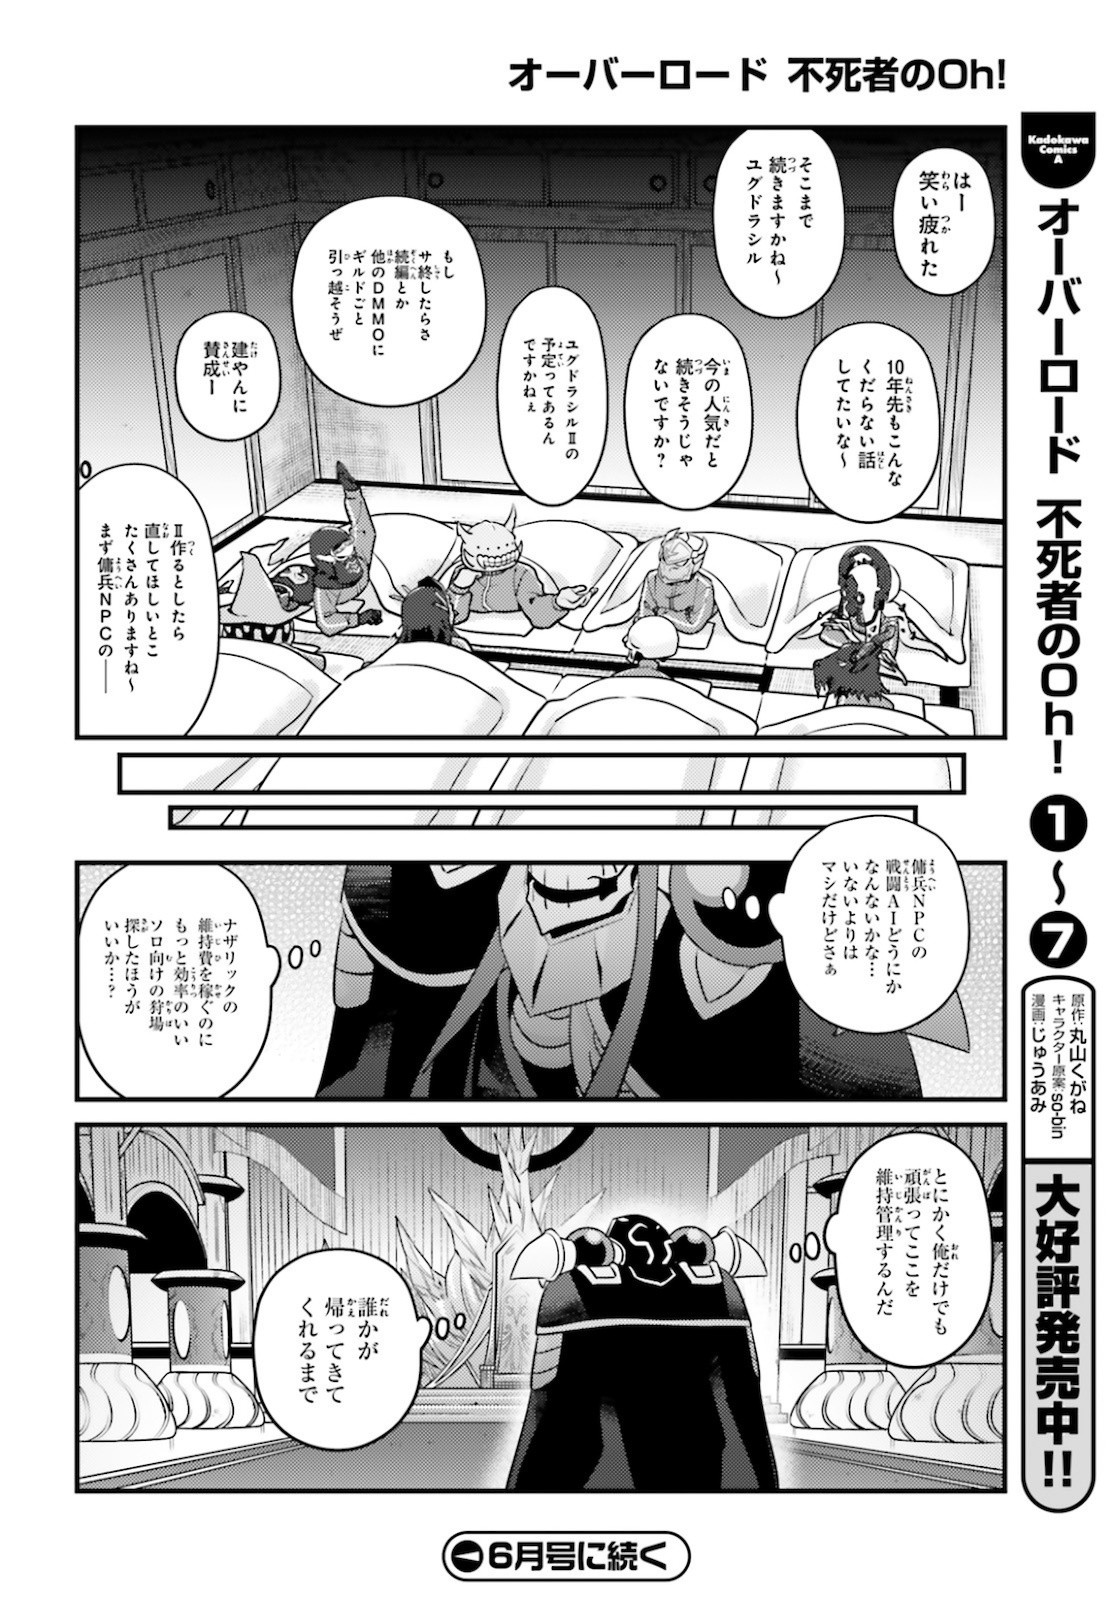 Overlord-Fushisha-no-Oh - Chapter 47 - Page 20